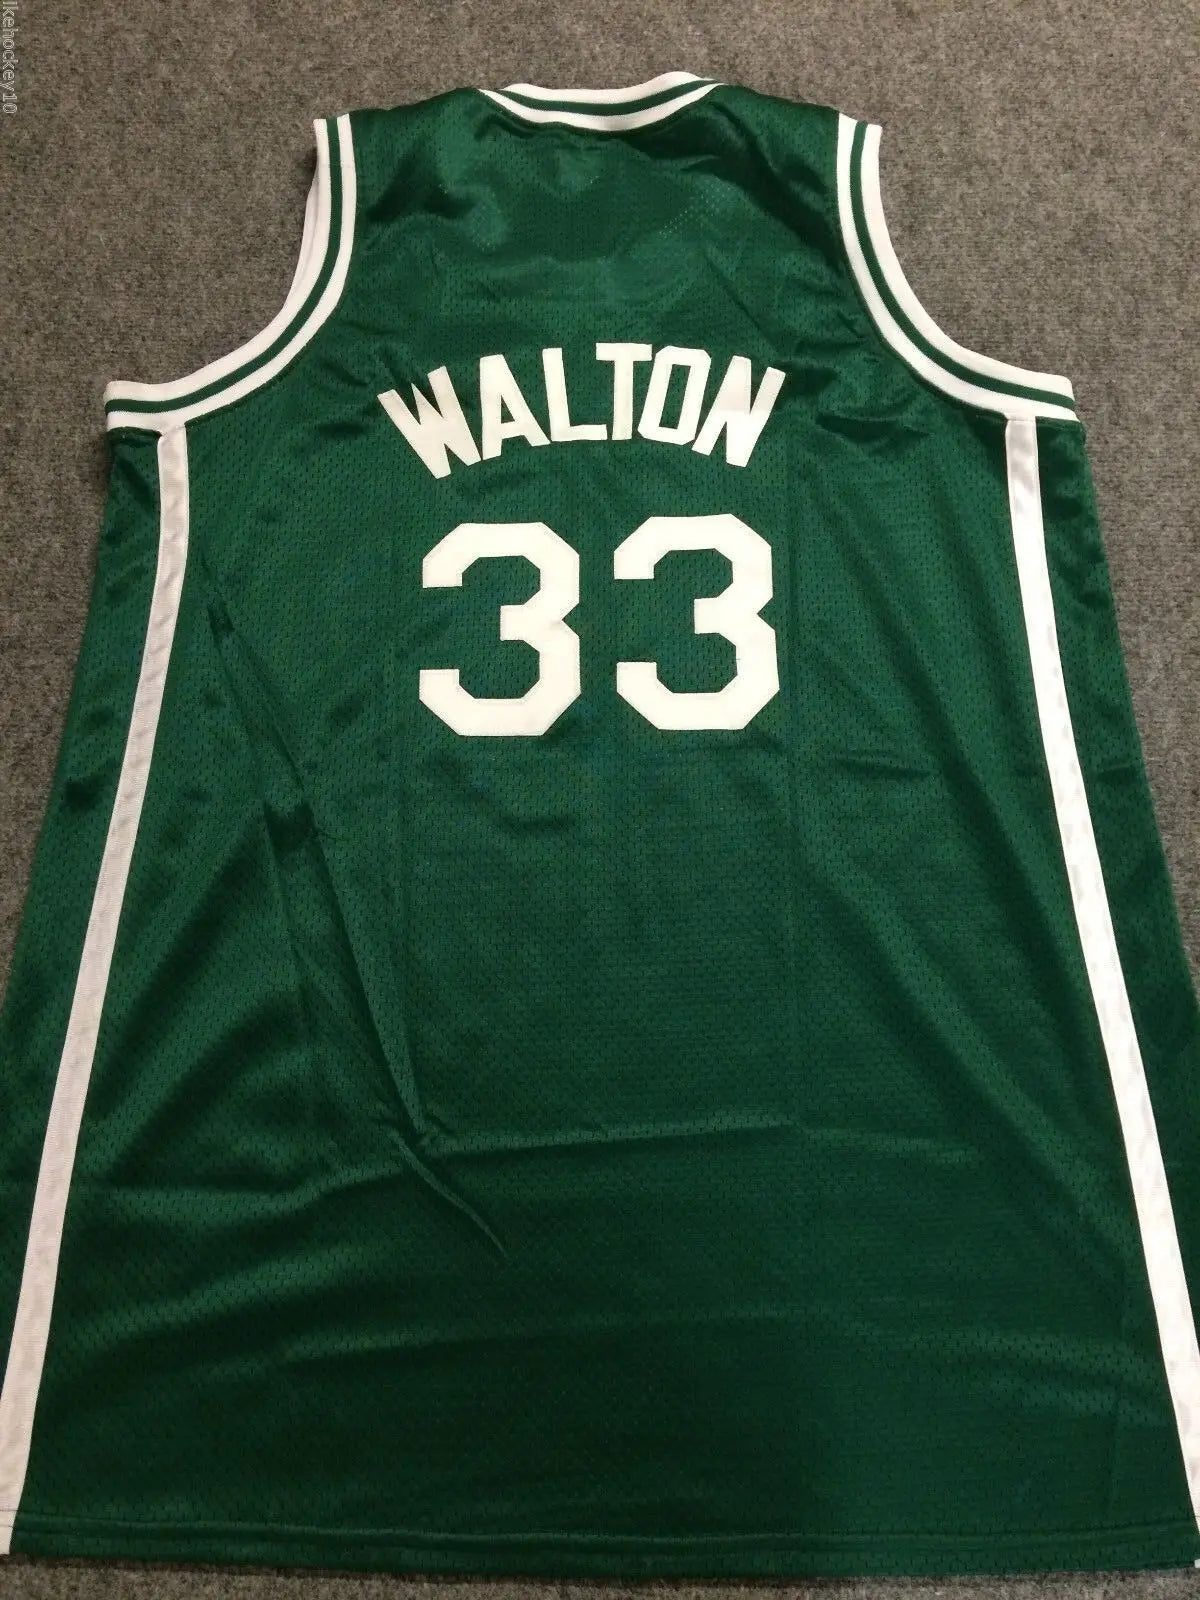 bill walton autographed basketball